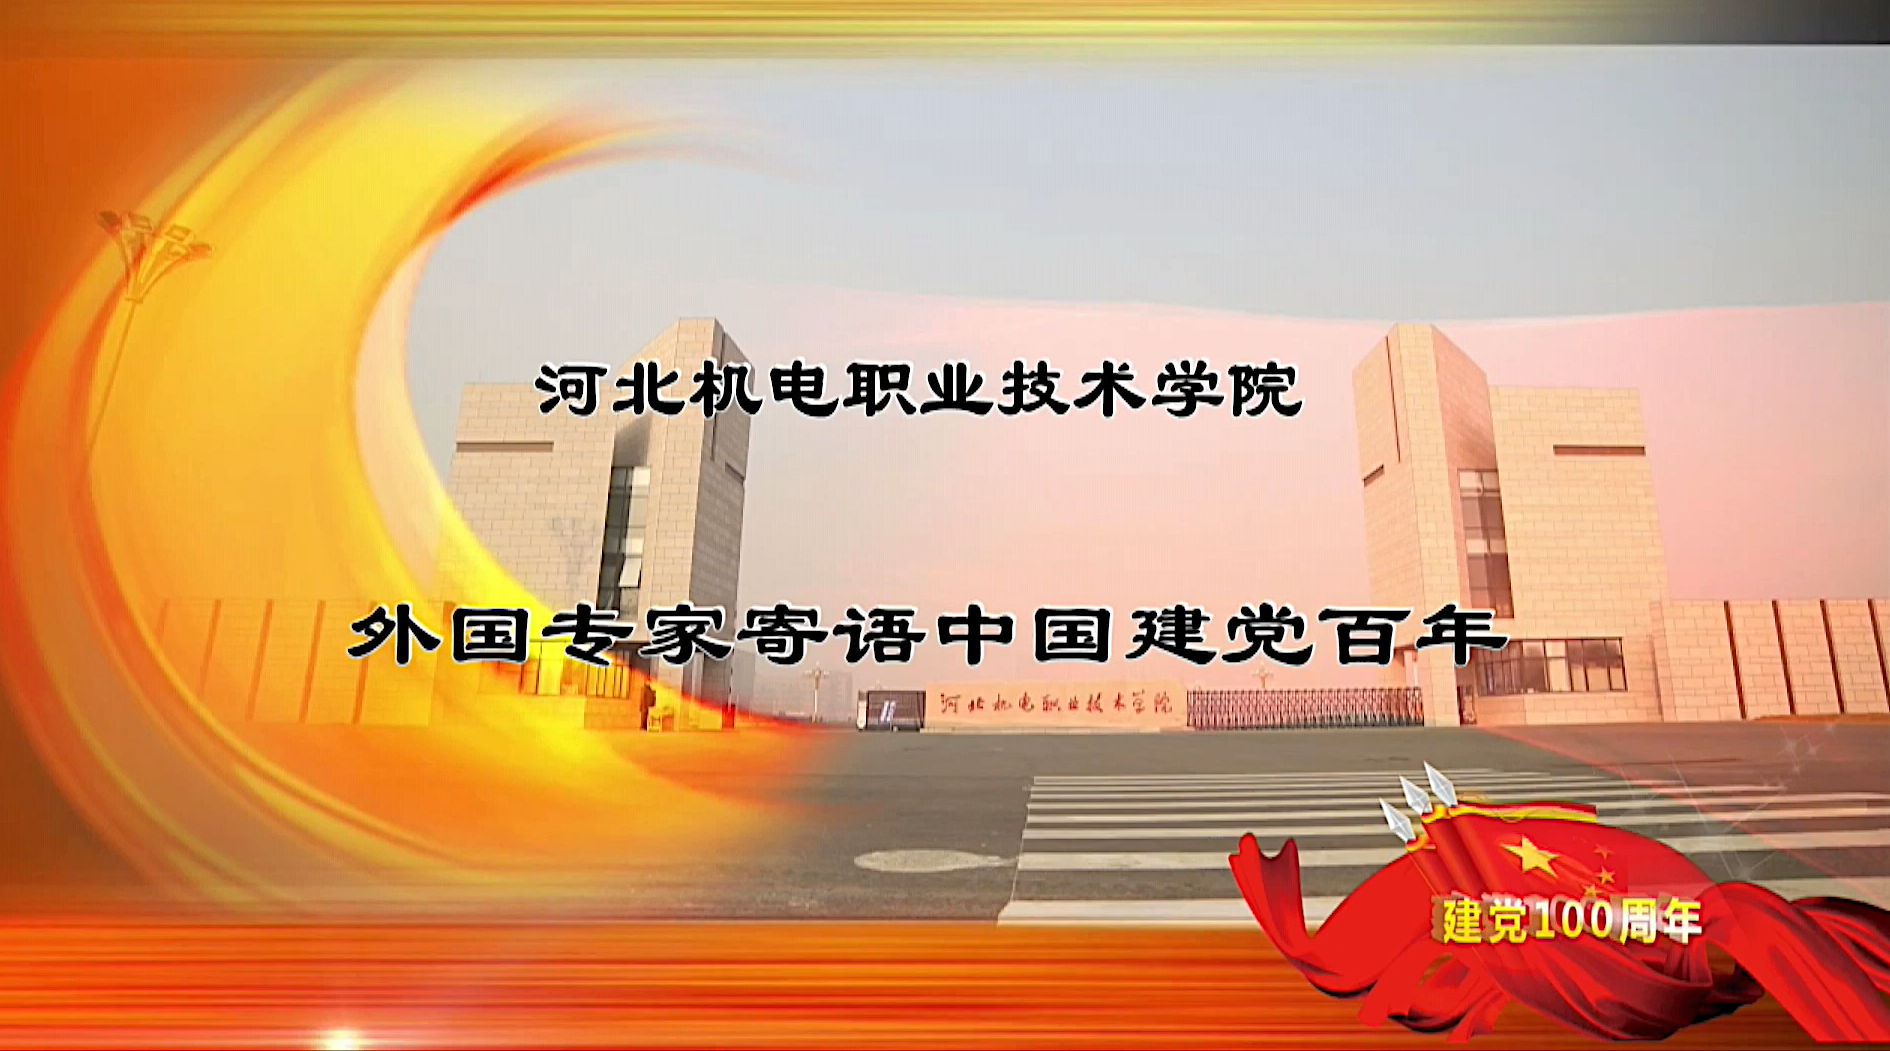 beat365官方网站国际友人寄语中国建党百年视频在《国际人才交流杂志》发布